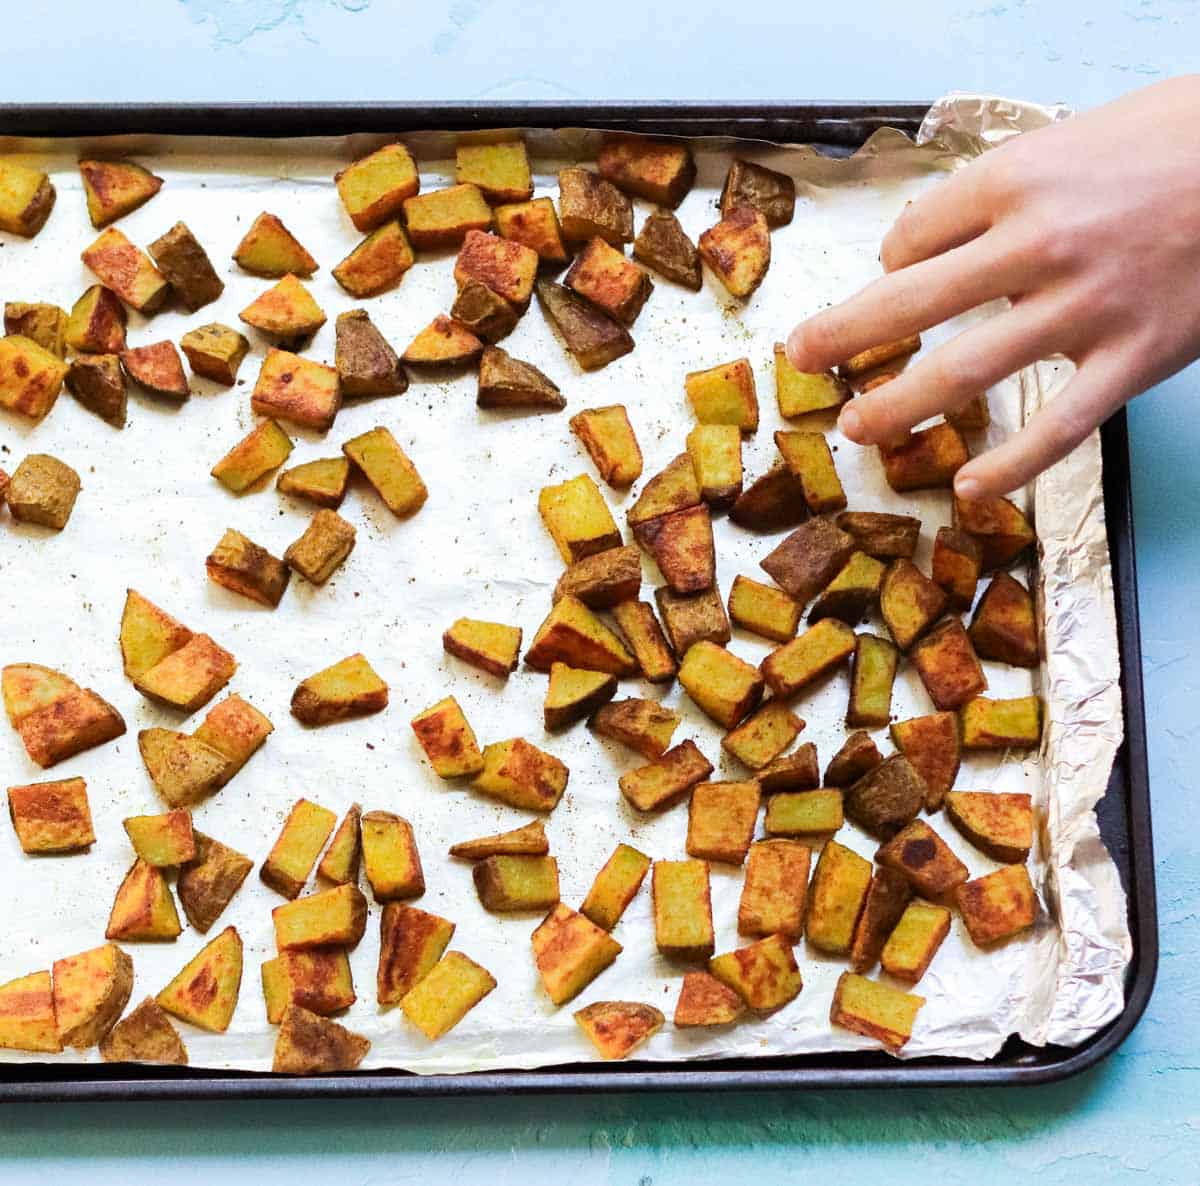 hand grabbing a curry roast potato off the baking sheet.